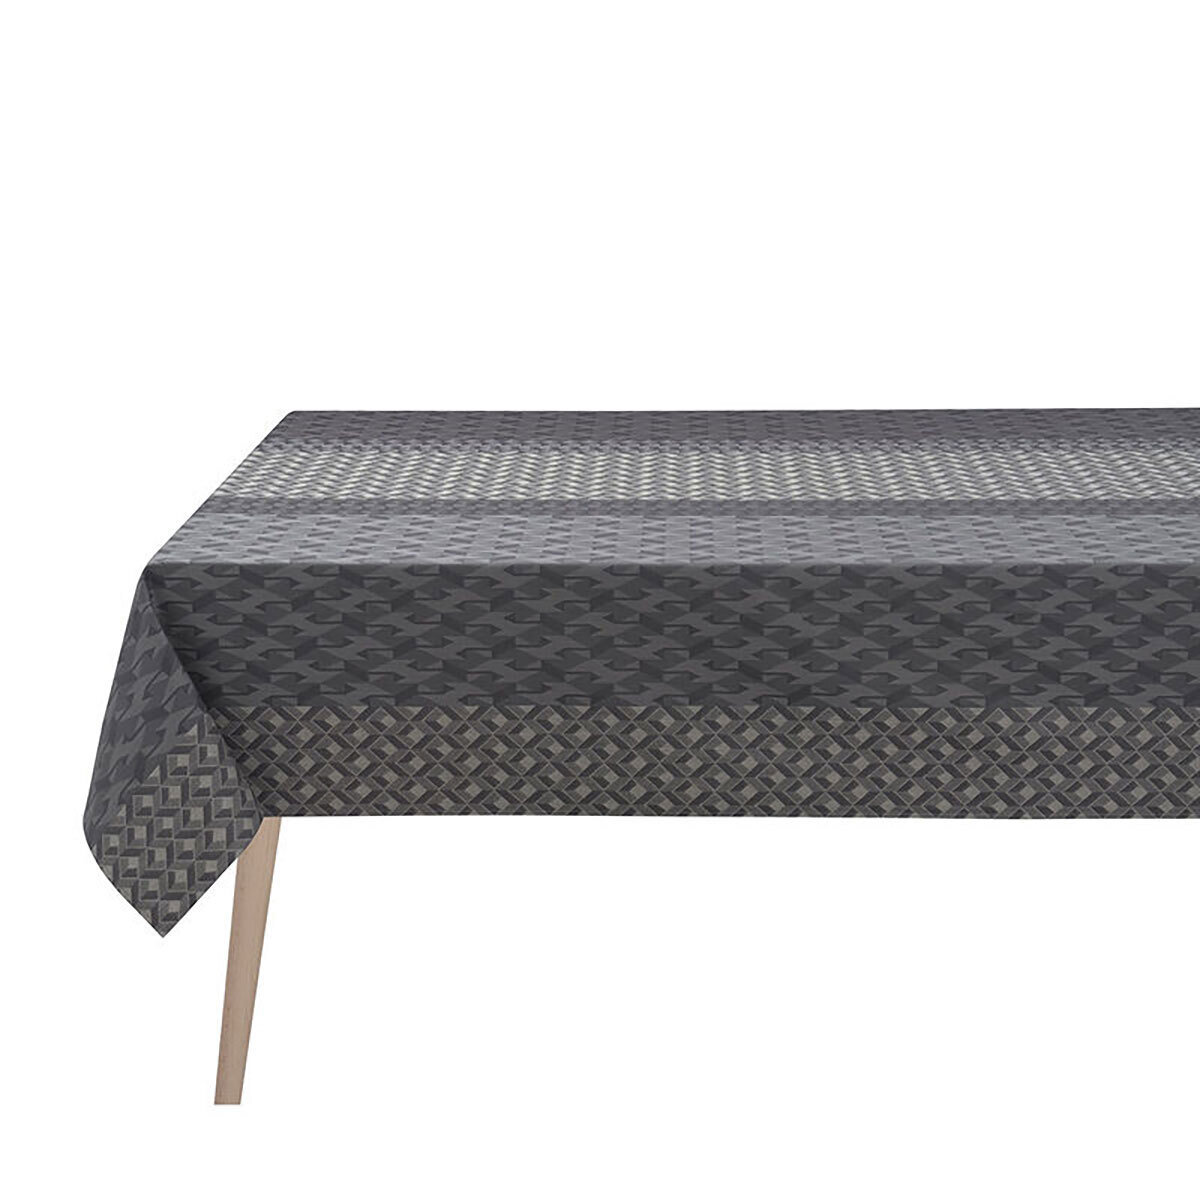 Le Jacquard Francais Tablecloth Caractere Grey 1100% Coated Cotton 59 x 59 Inch 28194